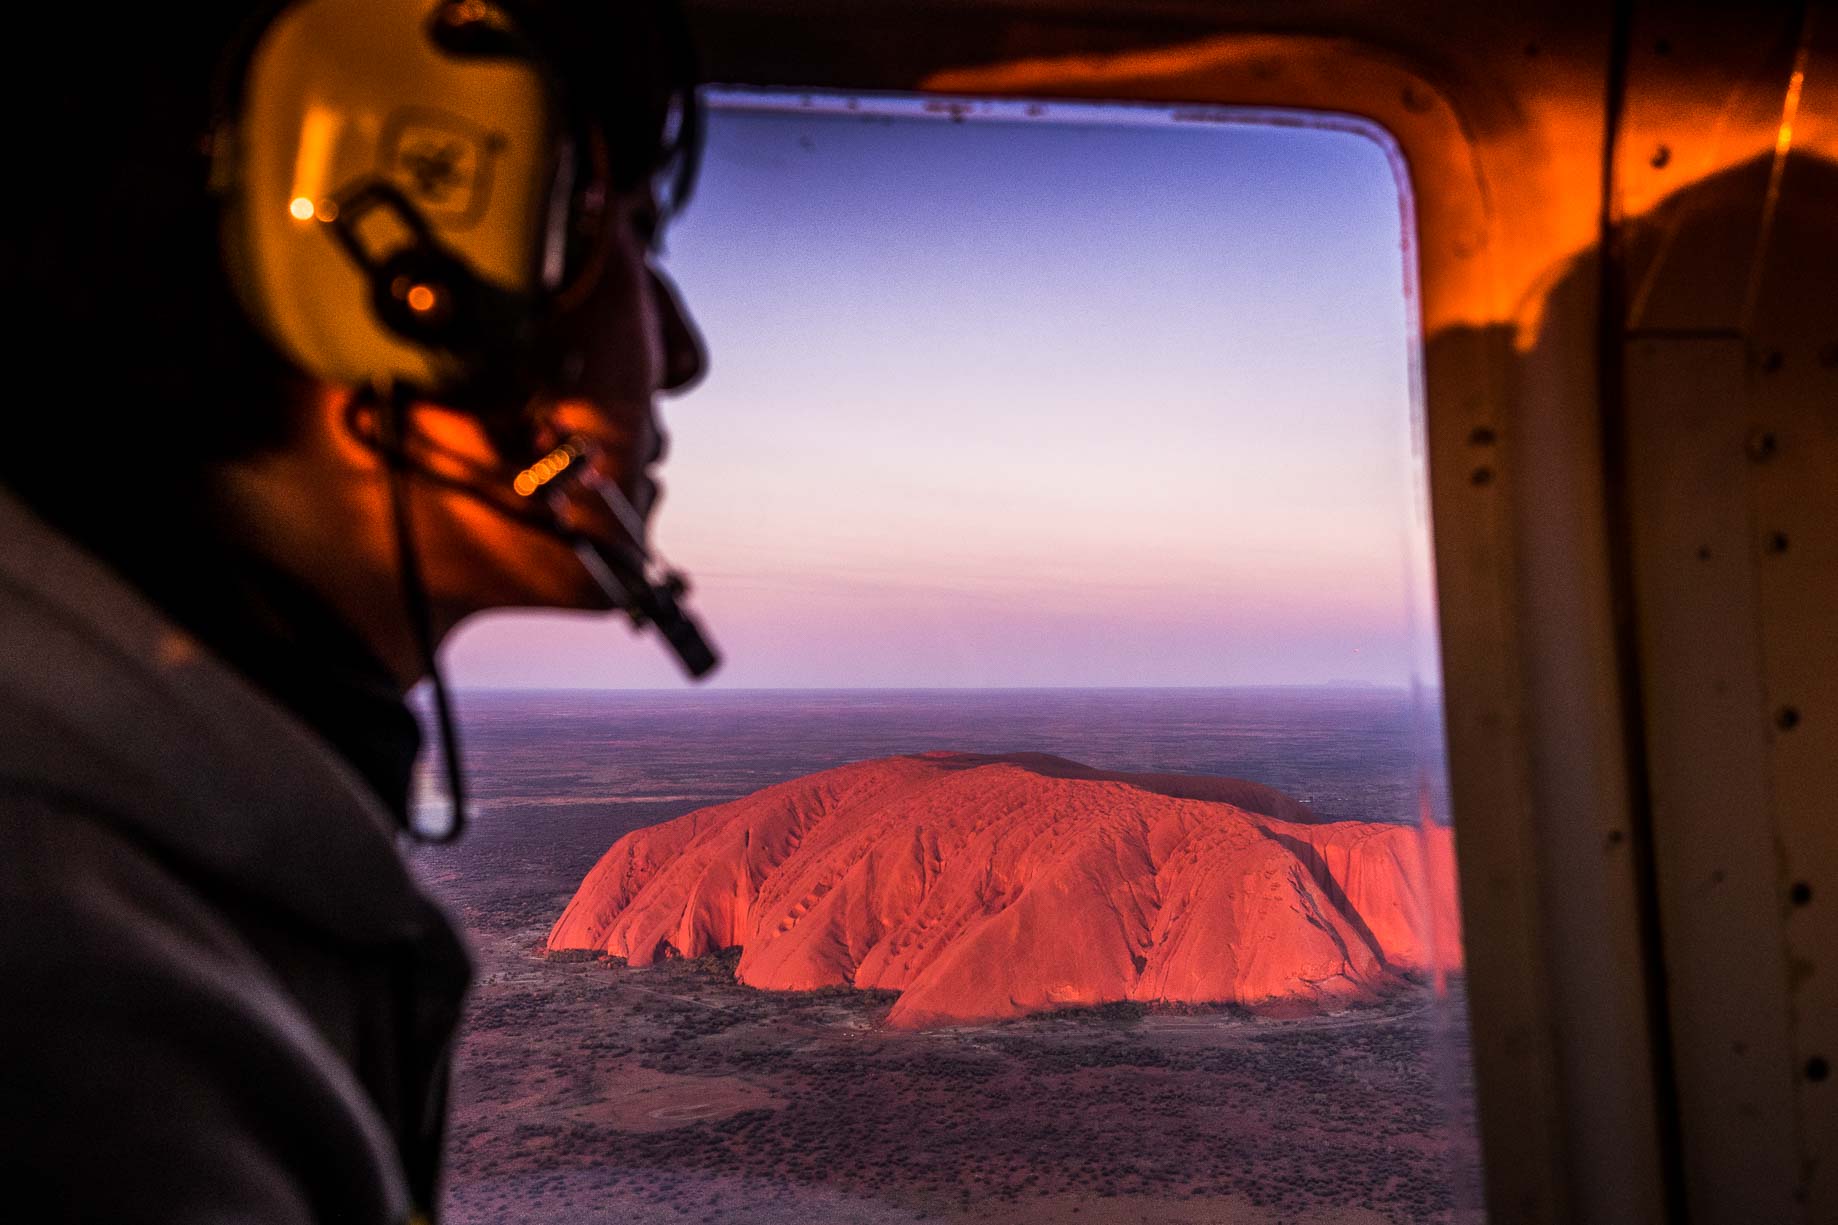 Central Australia - Amazing